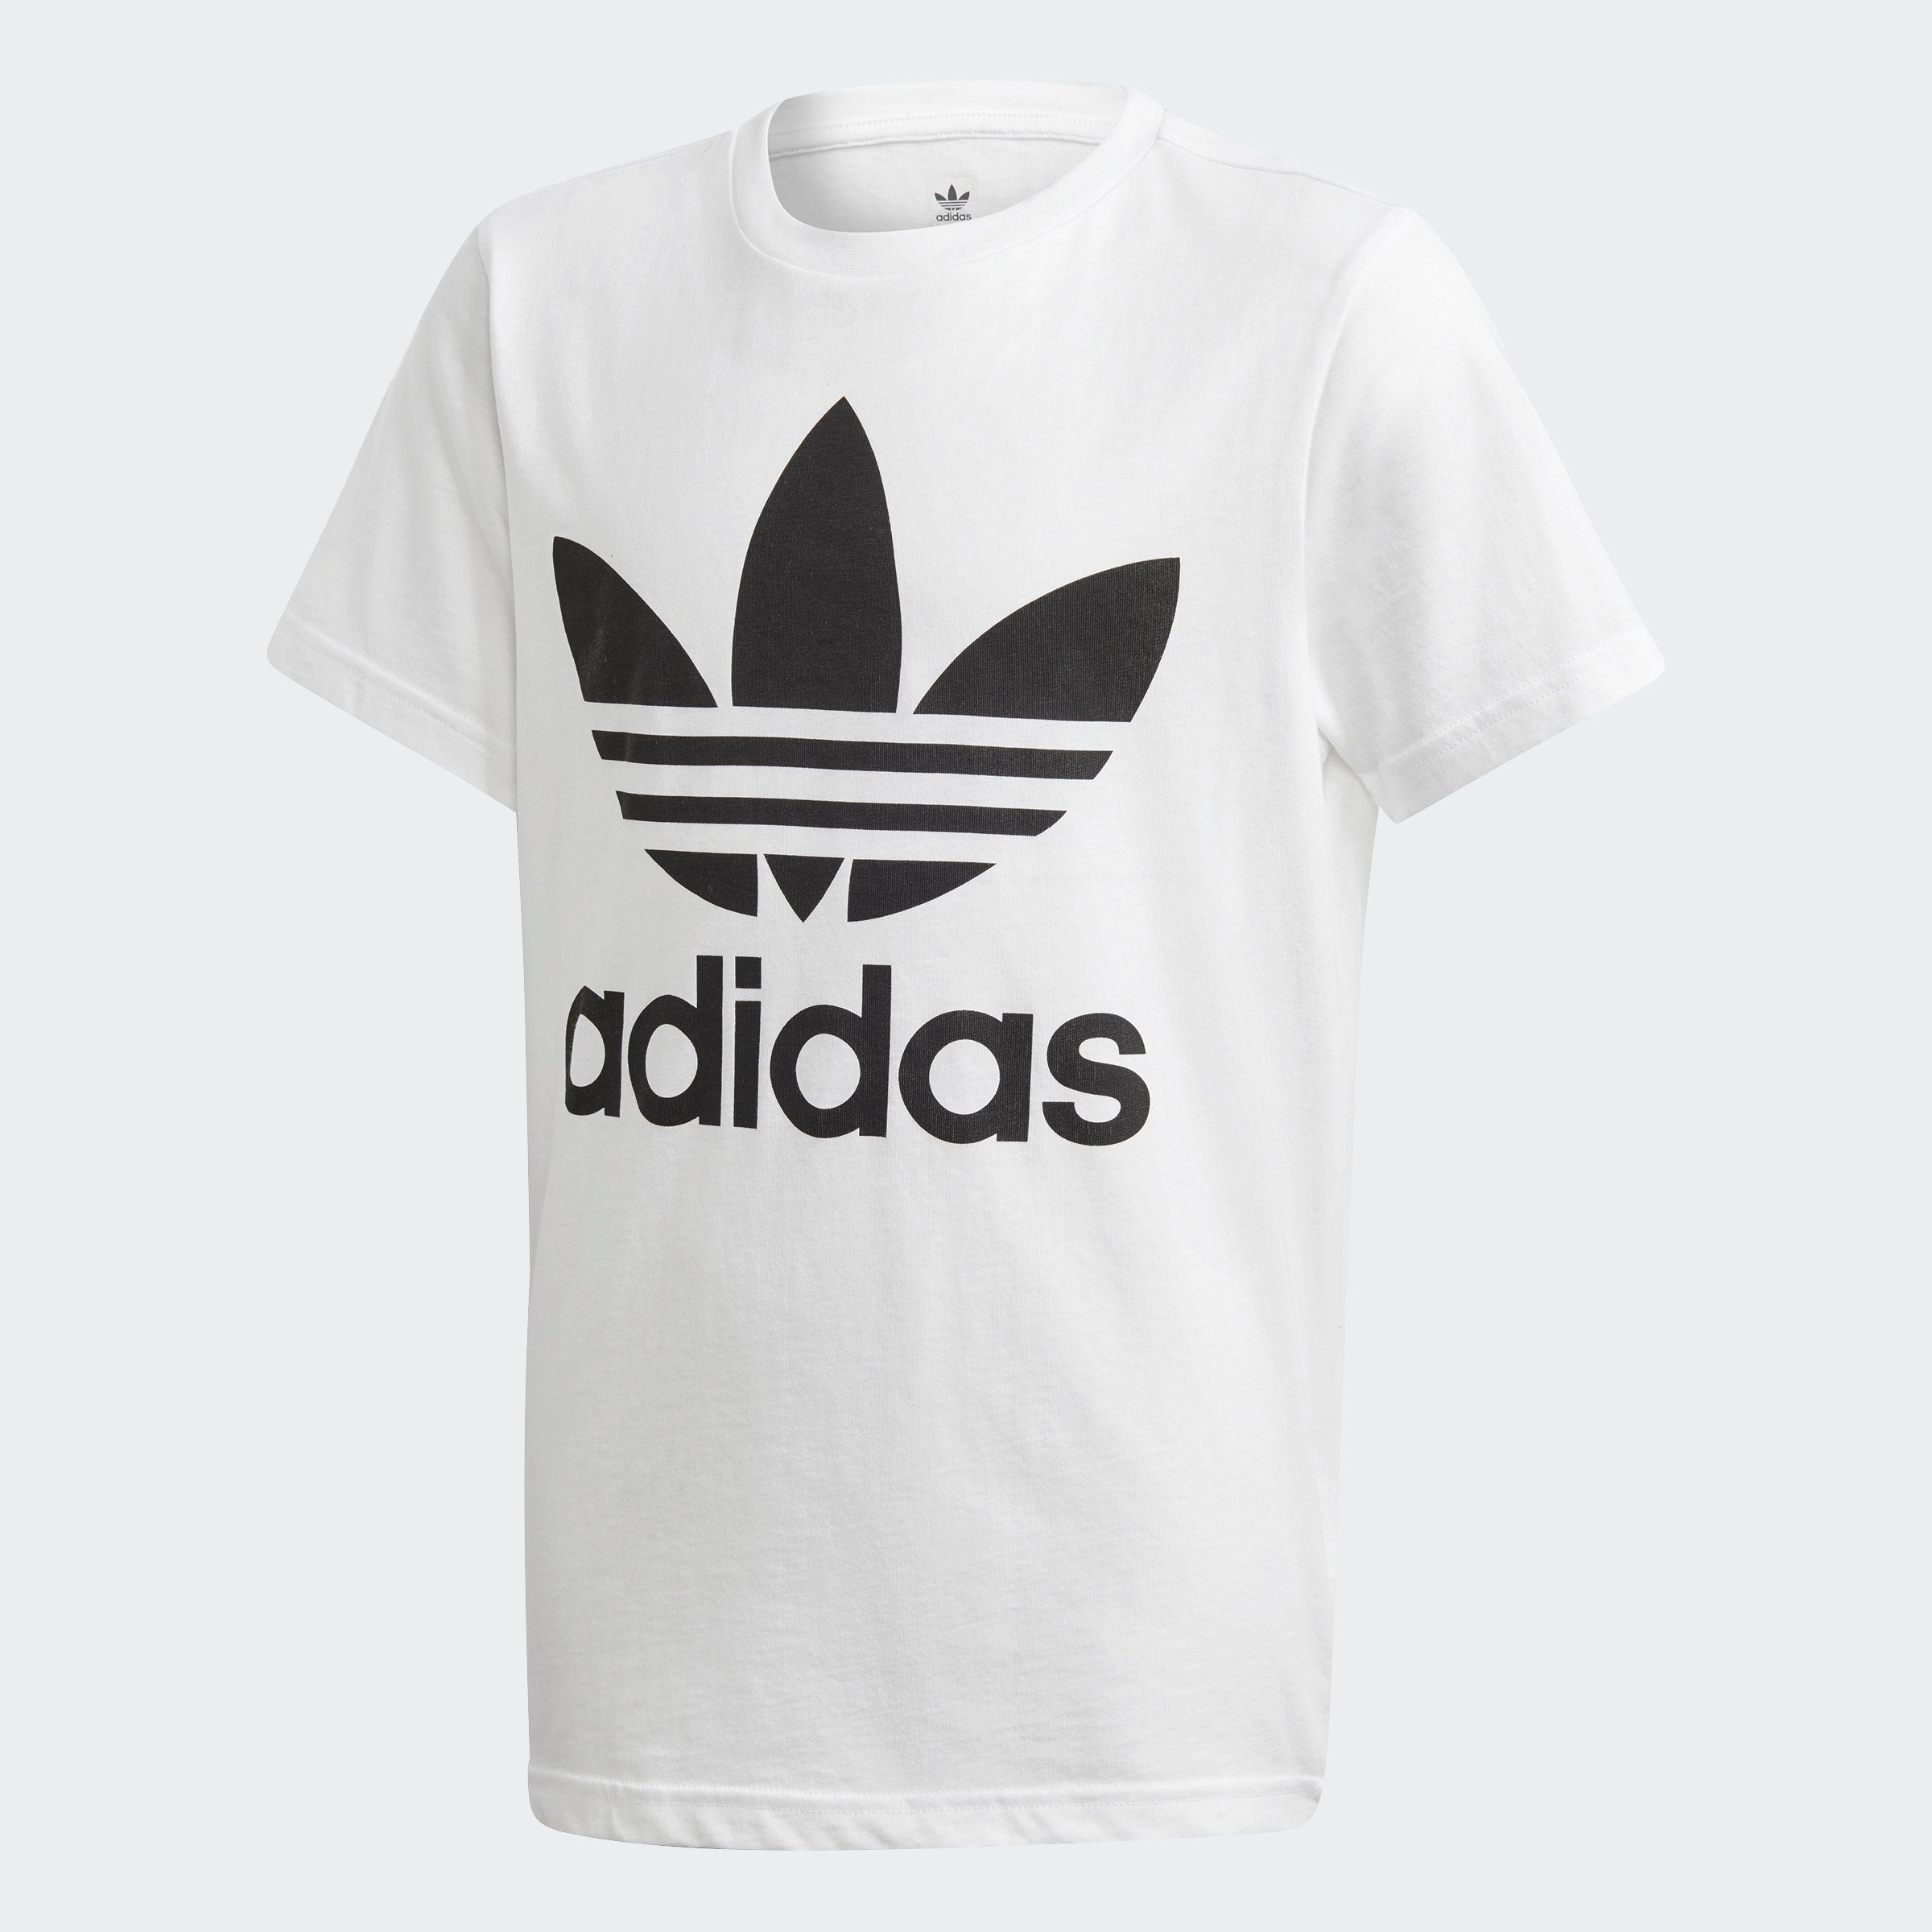 TEE White adidas T-Shirt Unisex / TREFOIL Black Originals